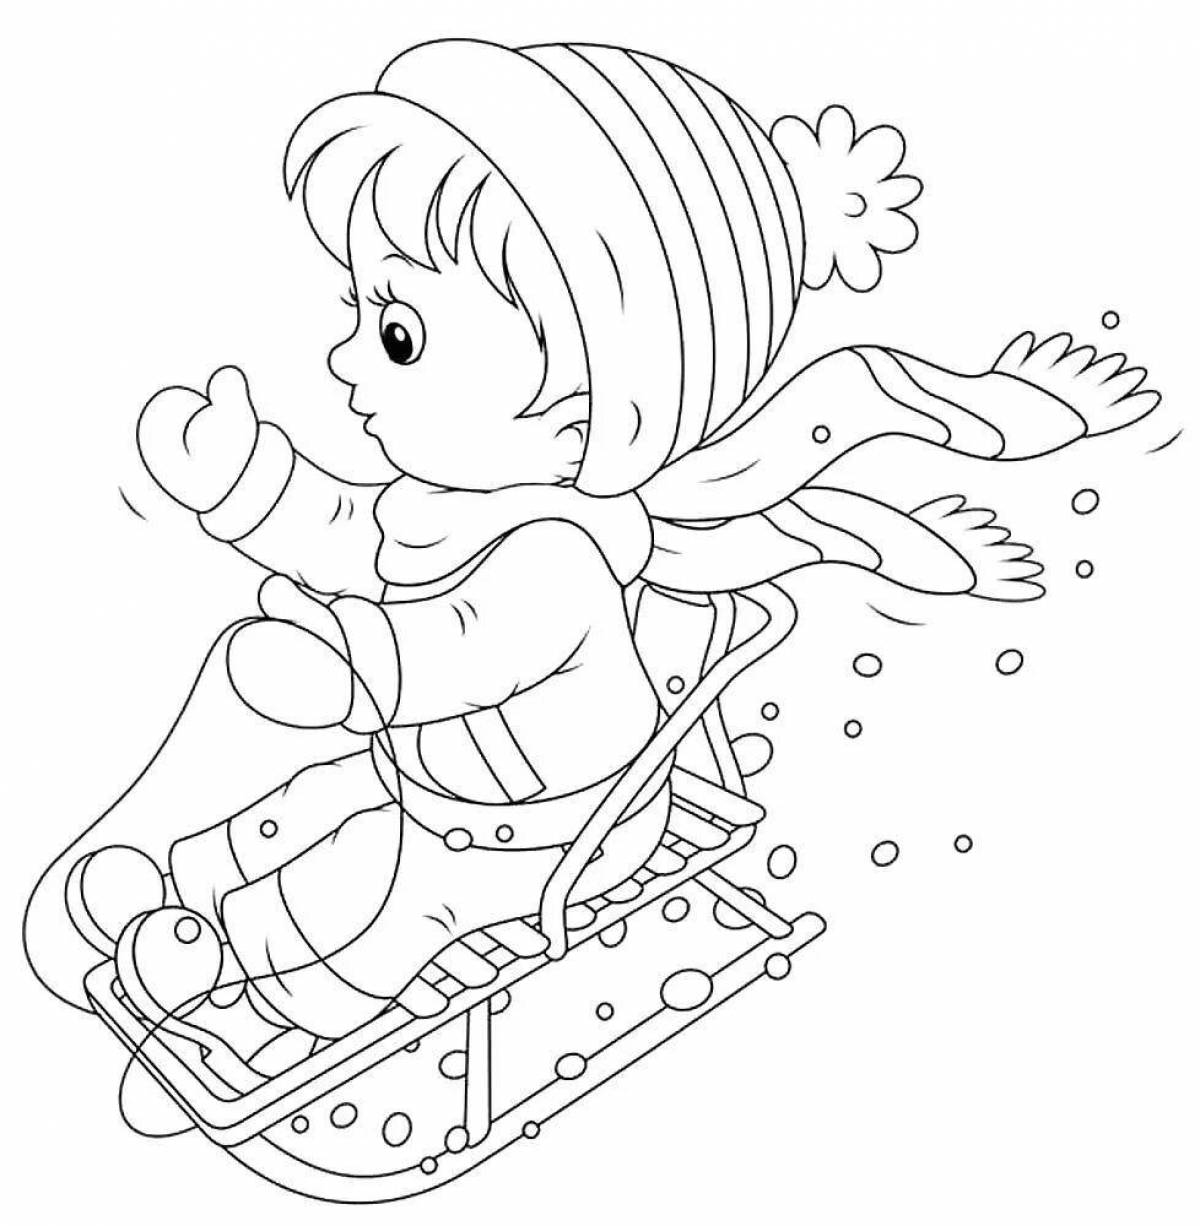 Active children sledding